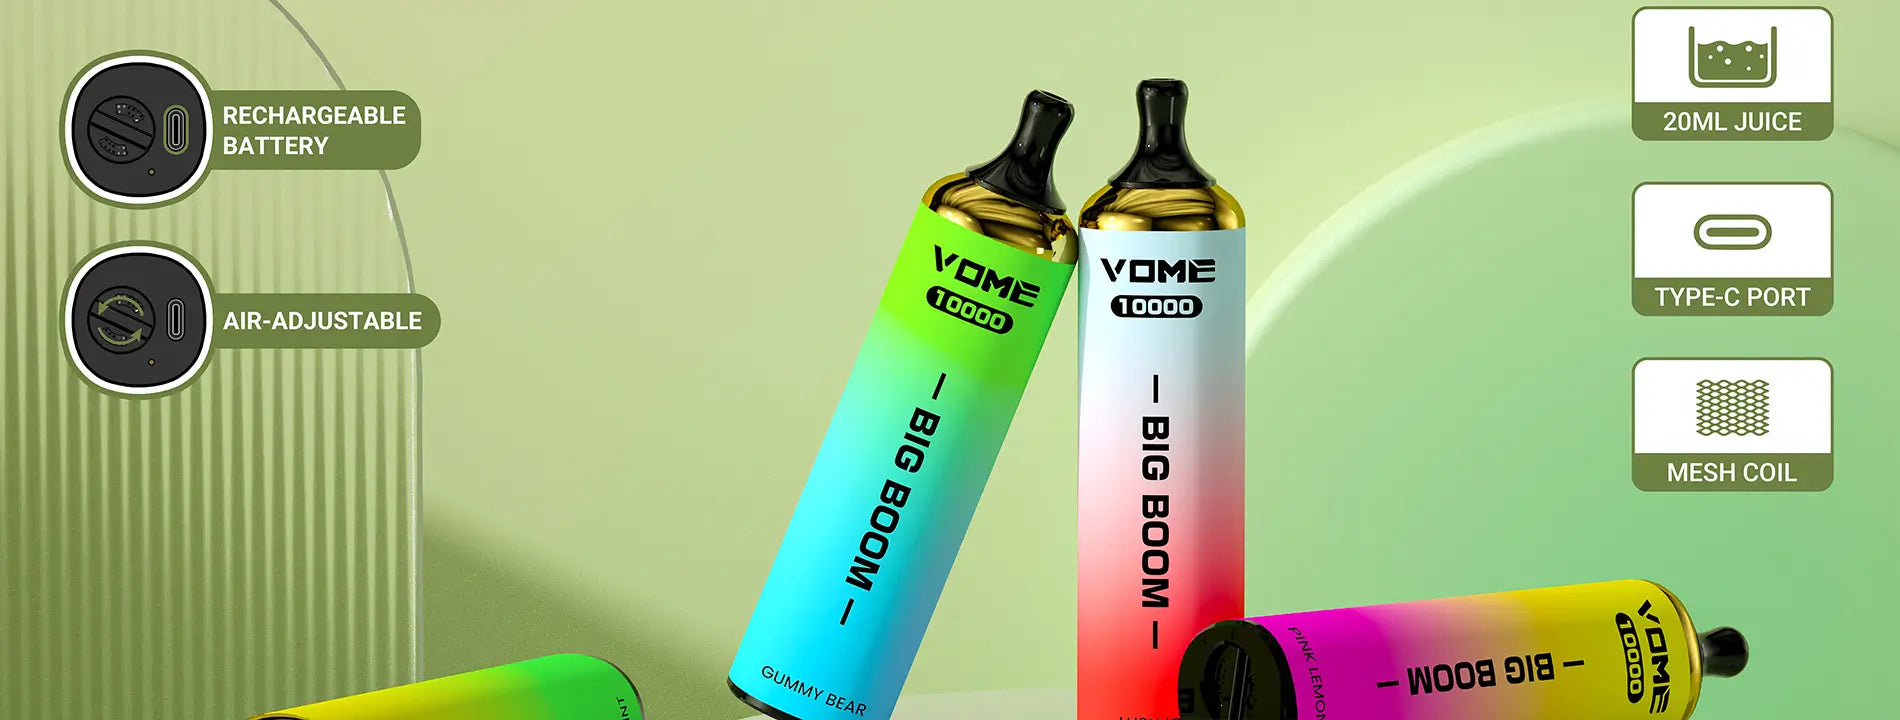 Vome Vape Official Site | Sub-brand of Fumot Tech – Vomevape